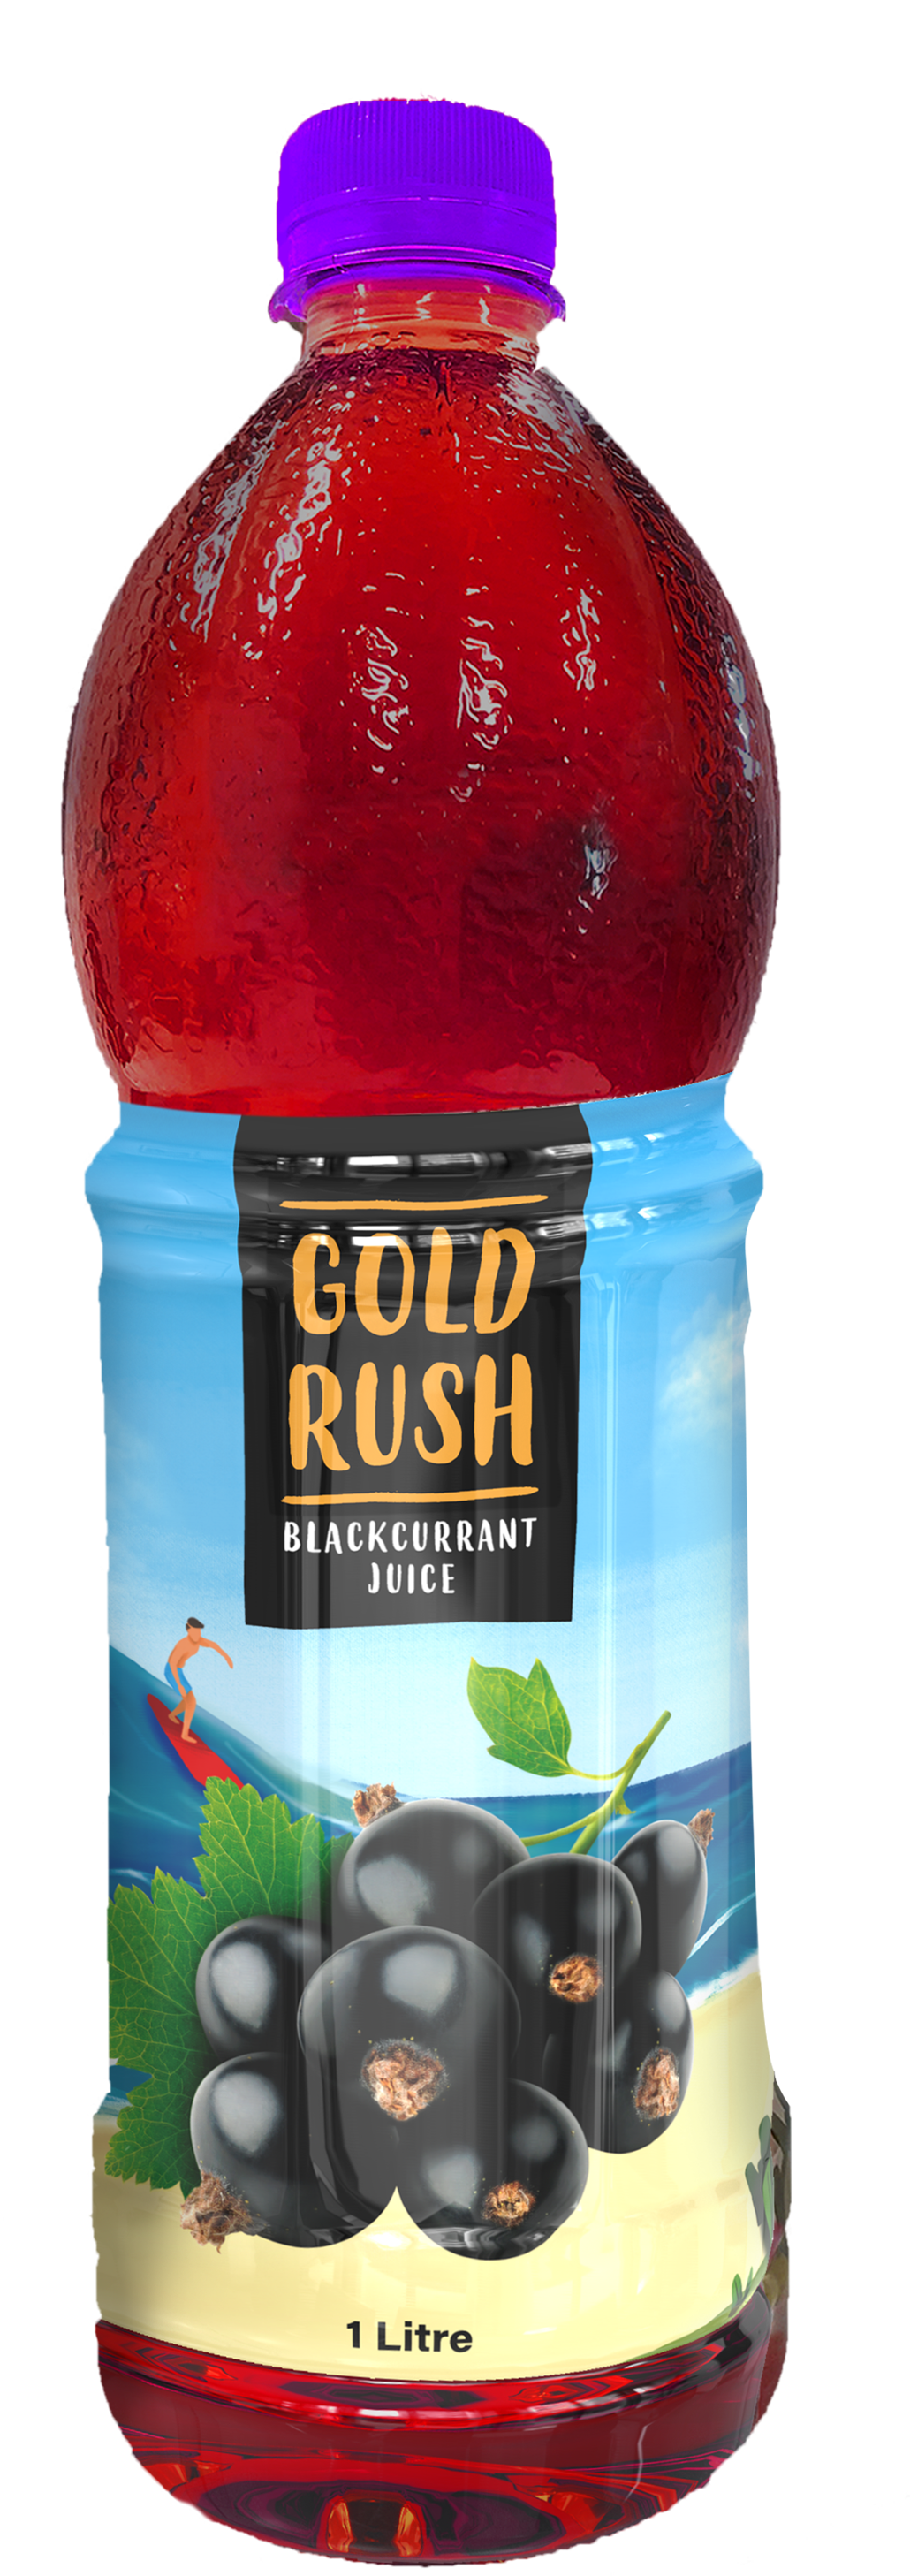 Gold Rush Range Blackcurrant Juice 1L x 12 pack